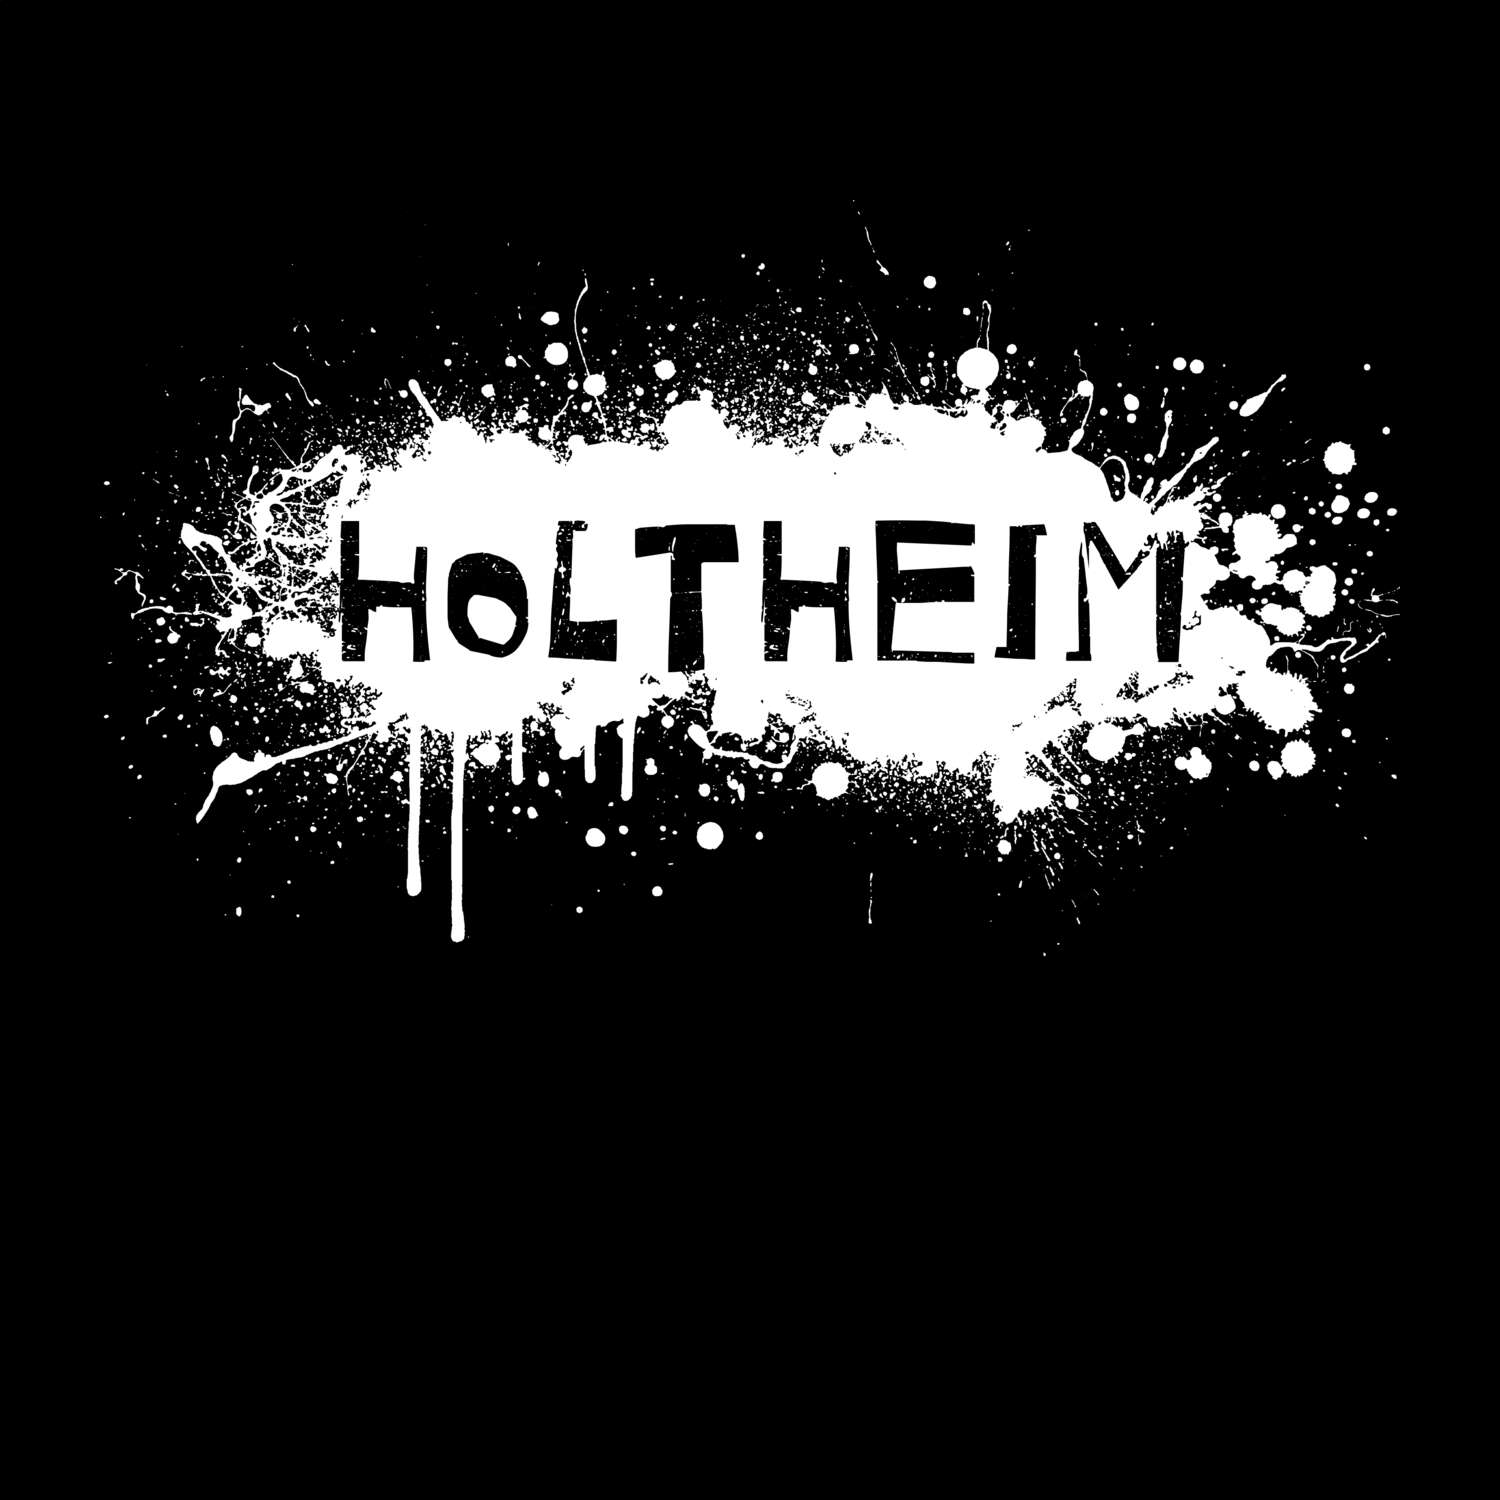 Holtheim T-Shirt »Paint Splash Punk«